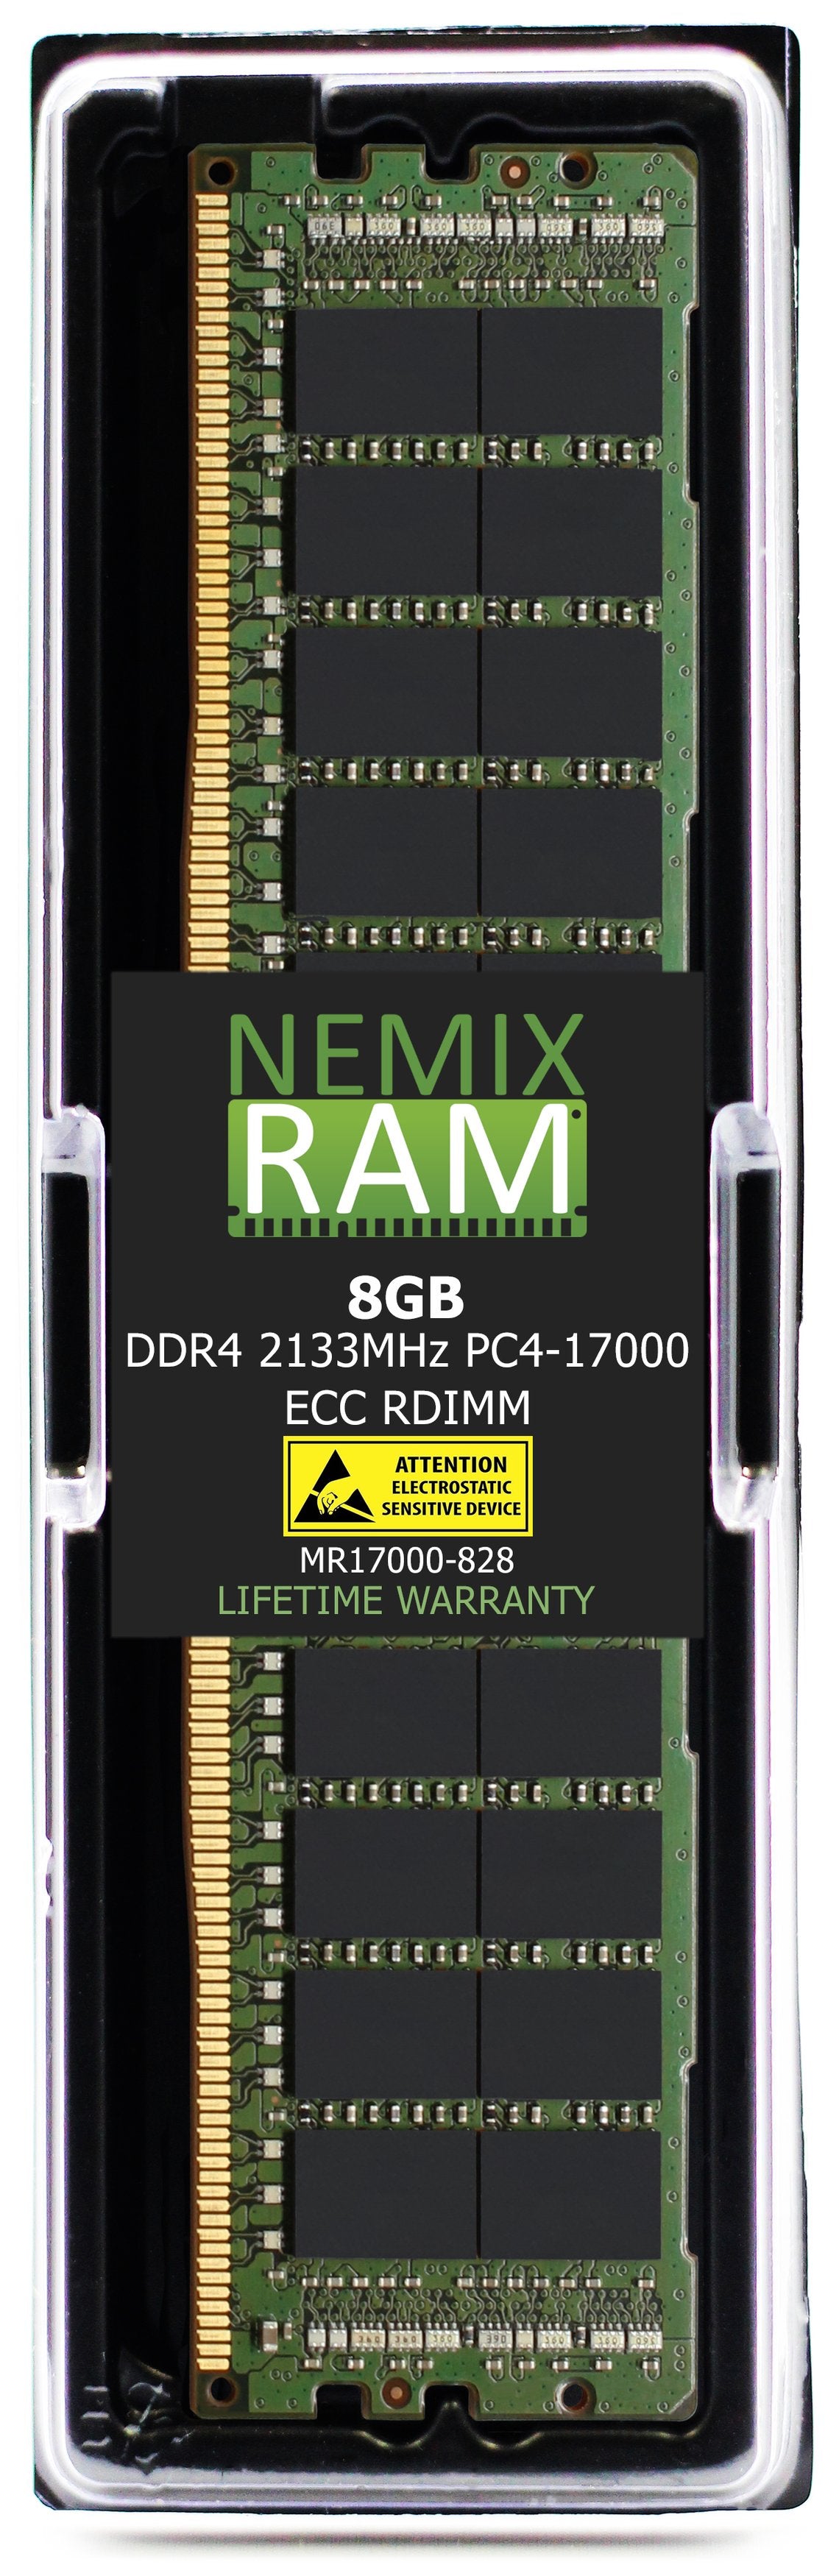 NEC Express5800 B120f Memory Module N8402-160F 8GB DDR4 2133MHZ PC4-17000 RDIMM